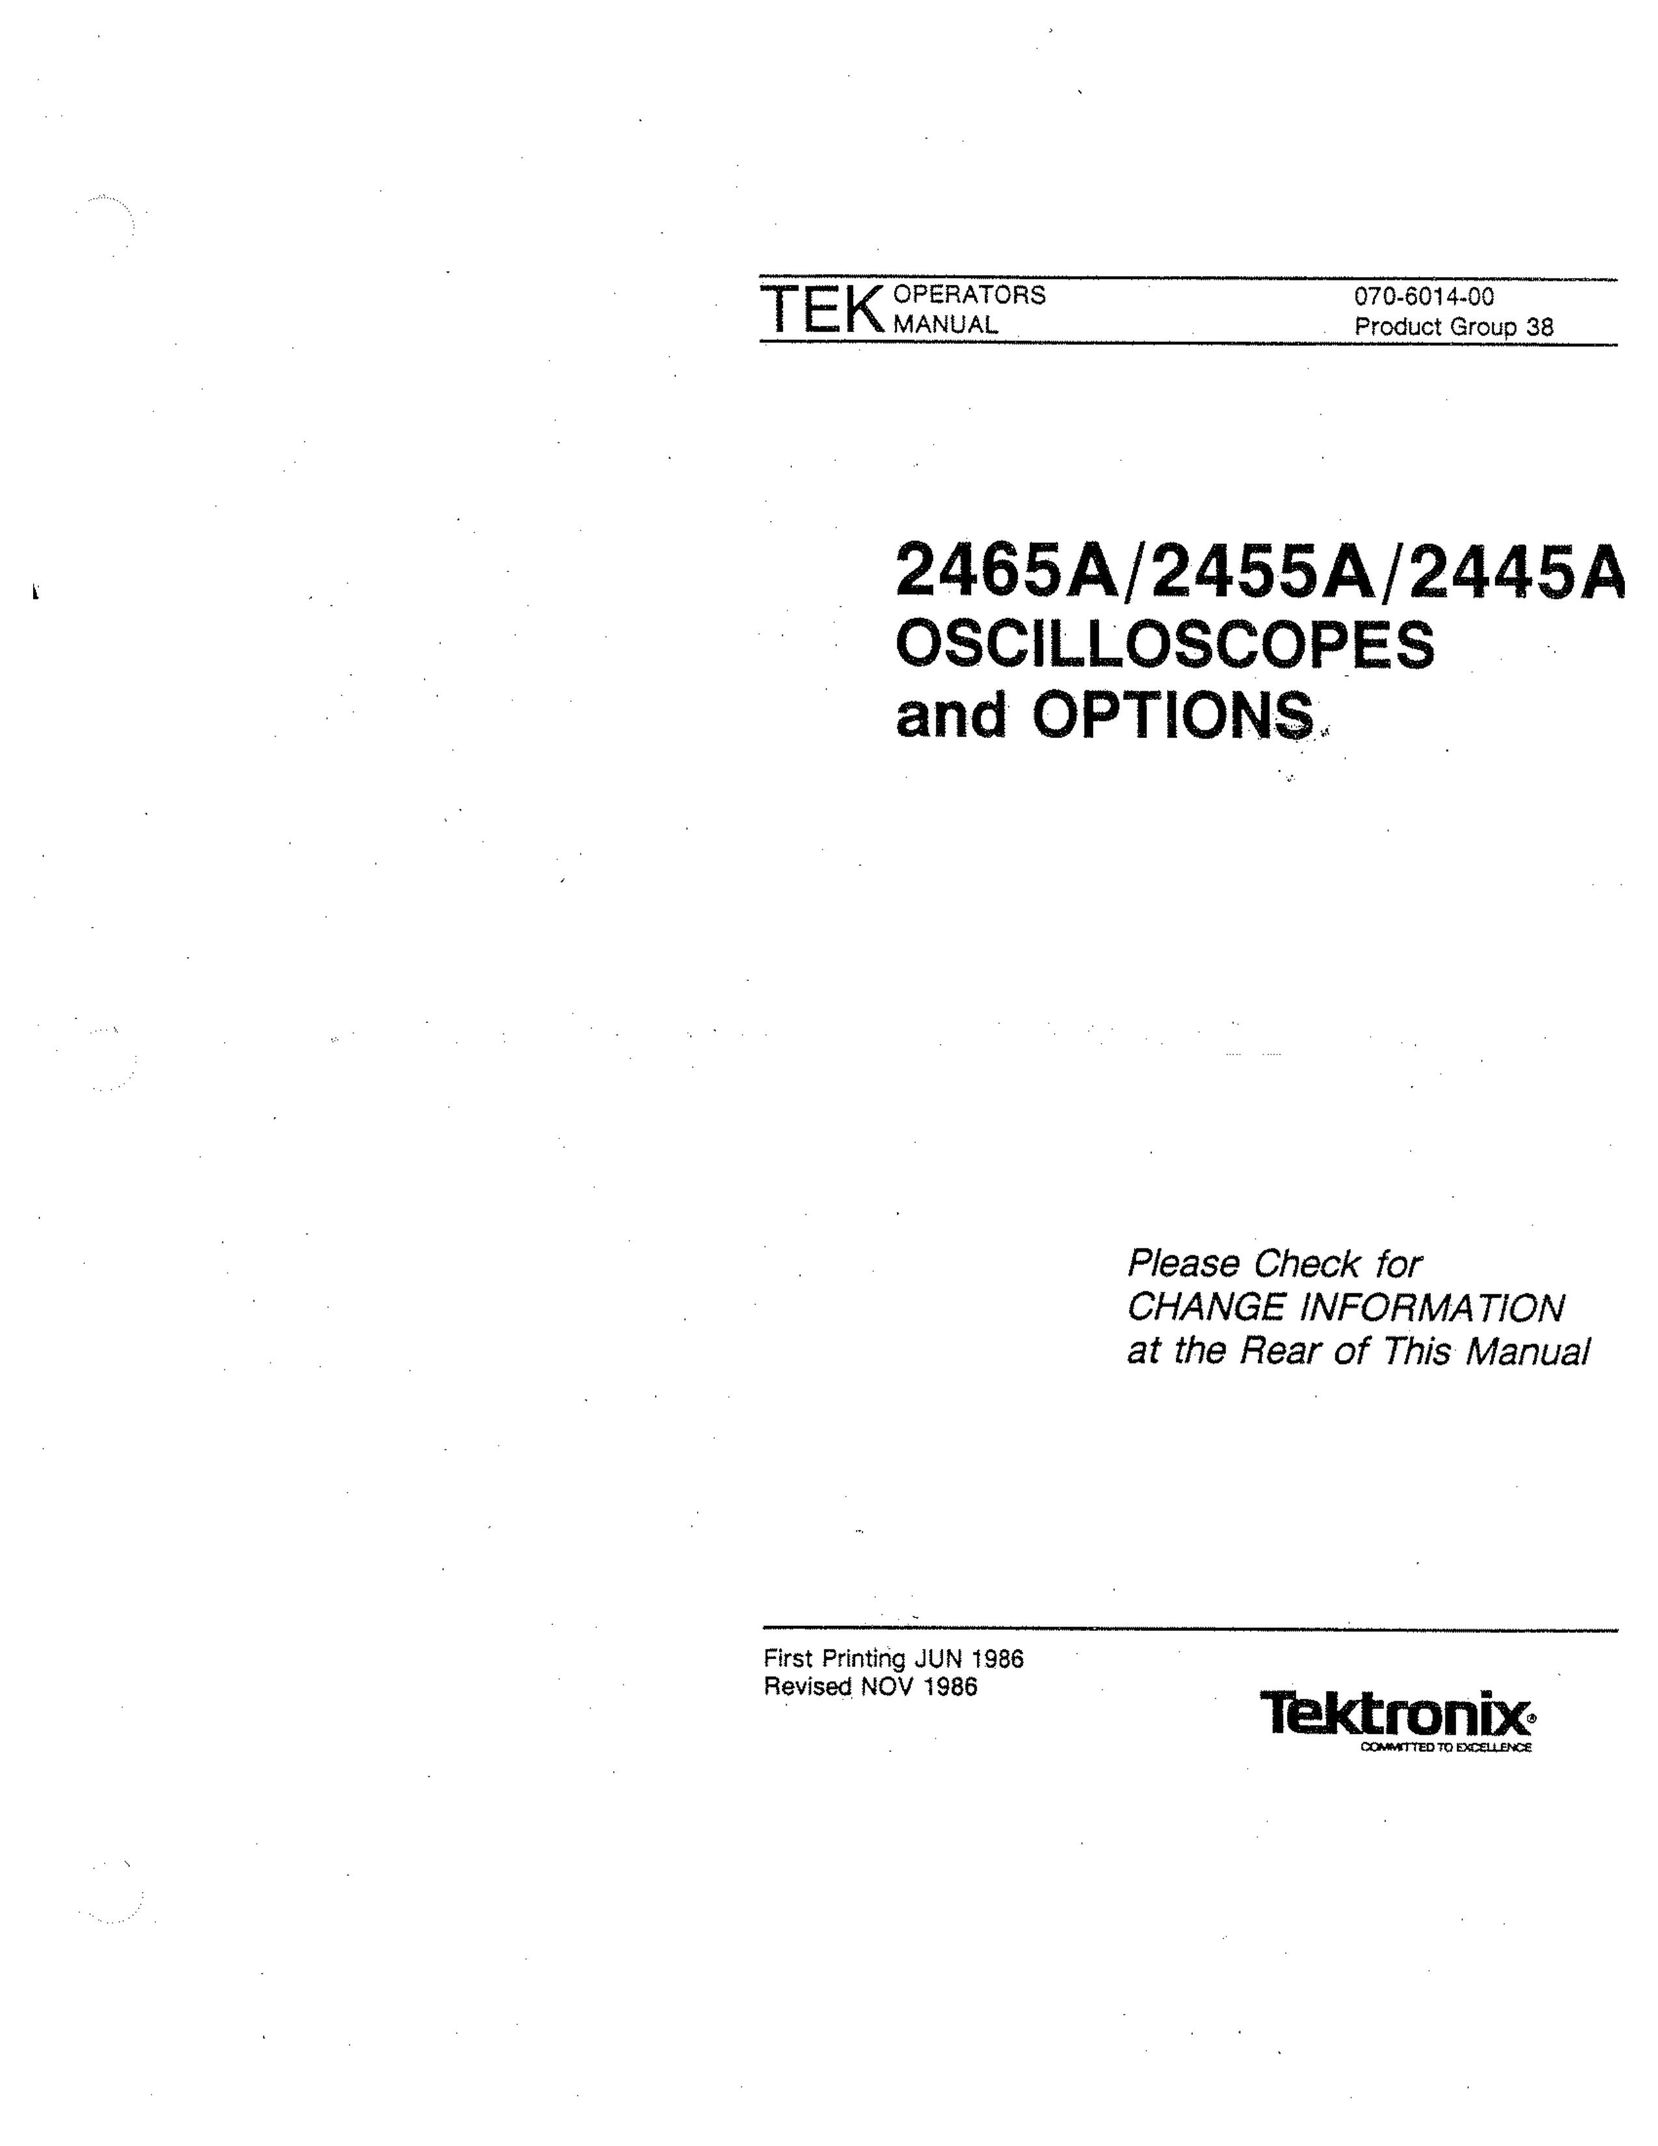 Tektronix 2445A Hunting Equipment User Manual